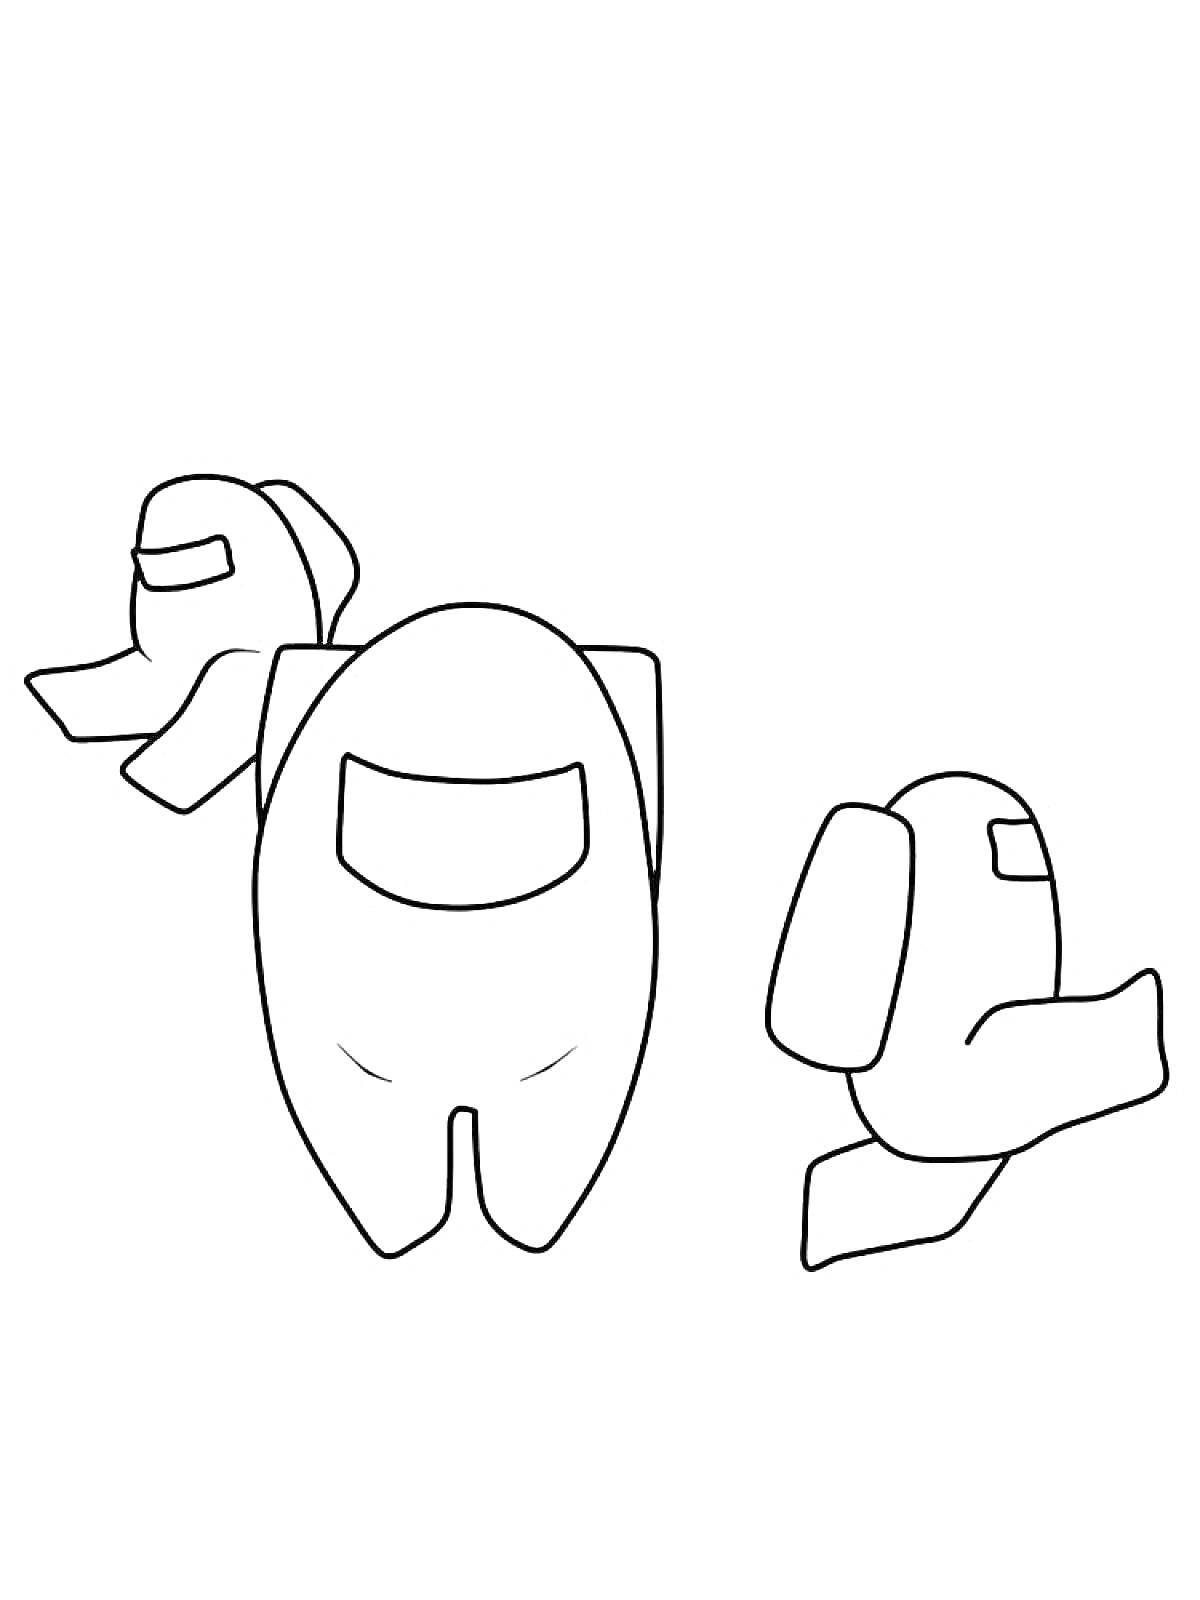 Три персонажа Амонг Ас с рюкзаками и иллюминаторами шлемов